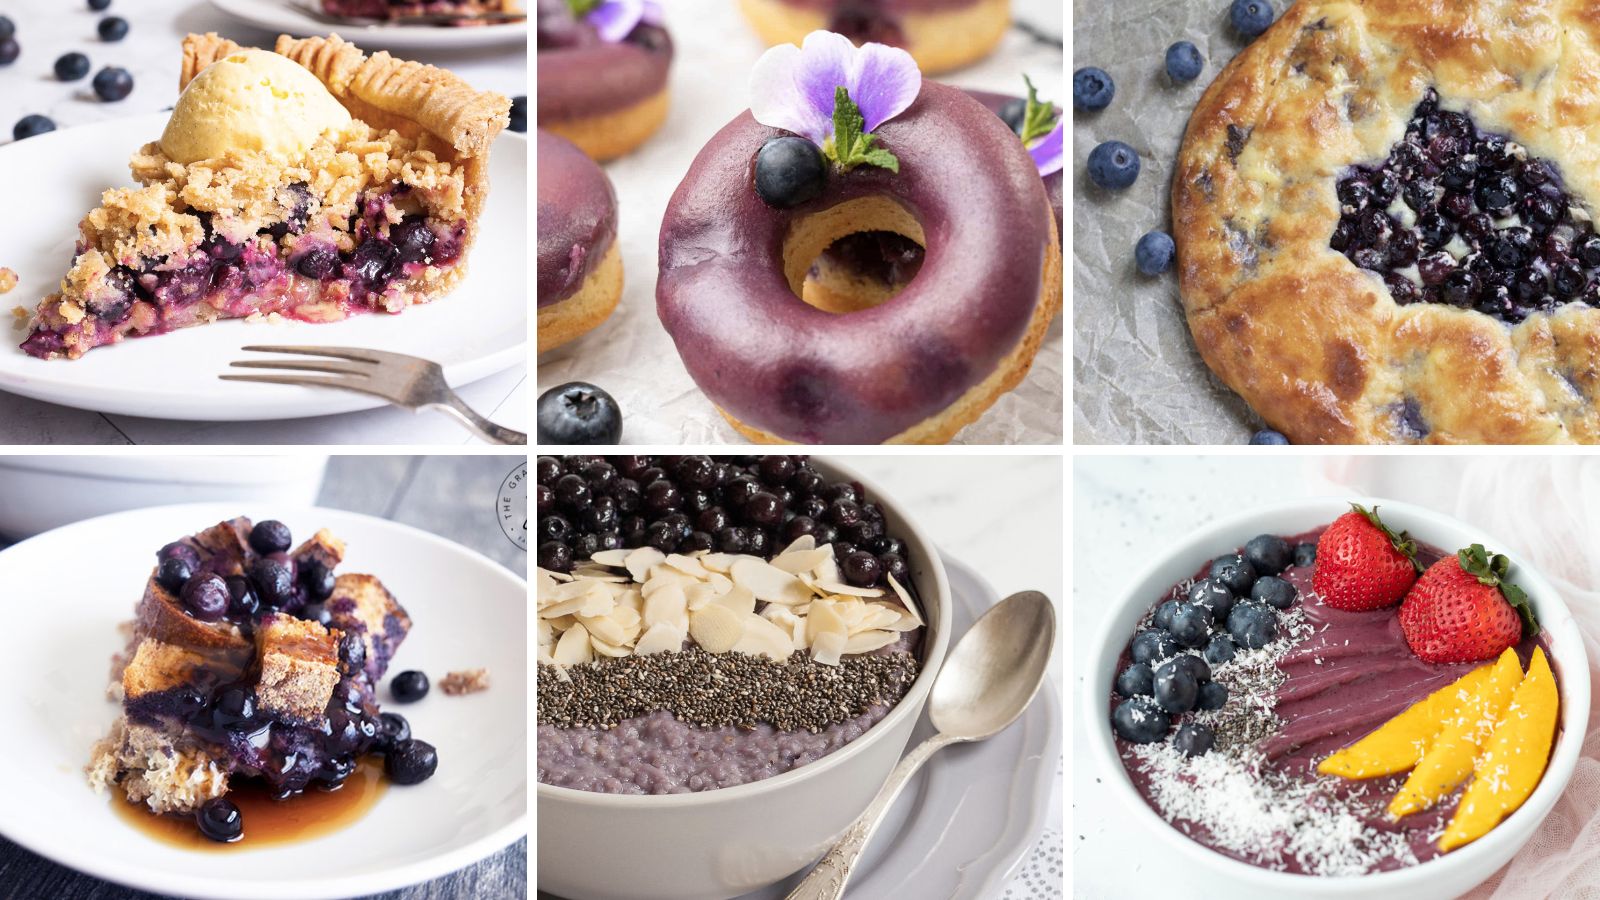 Blueberry pie slice, blueberry donut, blueberry galette, blueberry french toast, blueberry porridge, blueberry smoothie bowl.